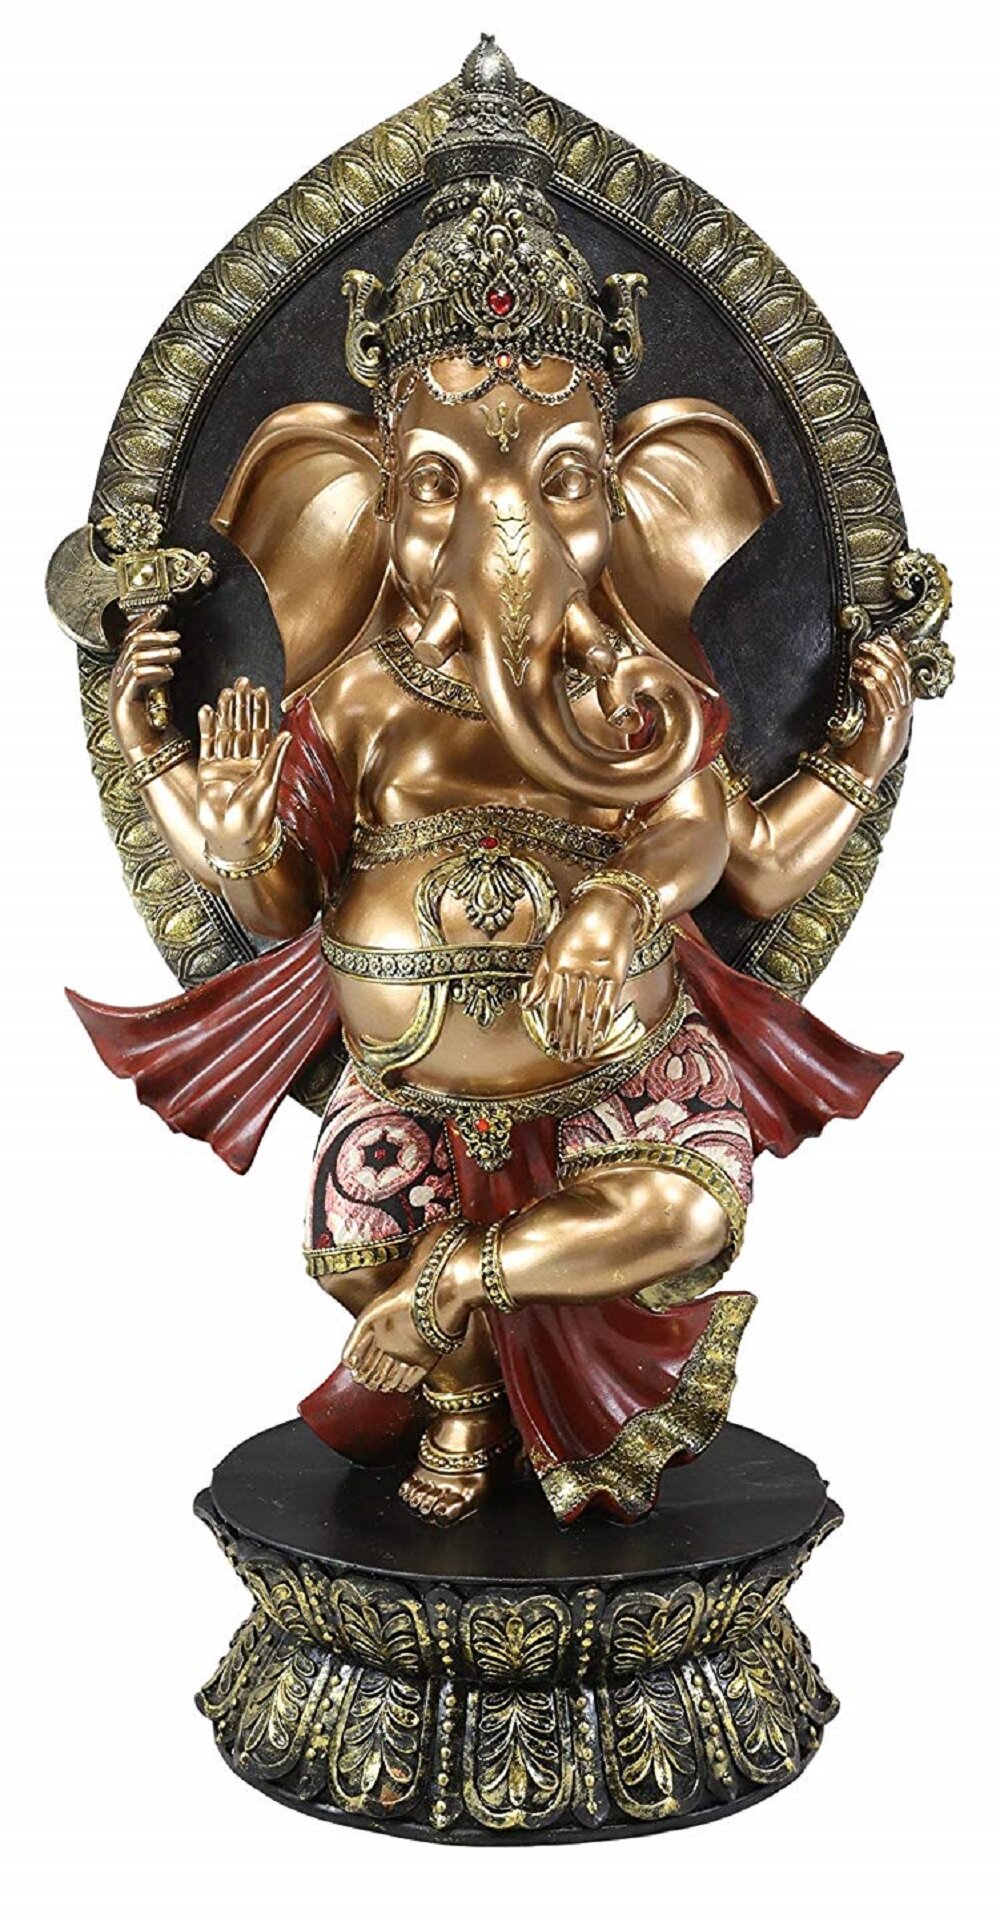 Yoga Pose Ganesha Garden Statue cast Lava stone Elephant God Sculpture Bali  art | eBay